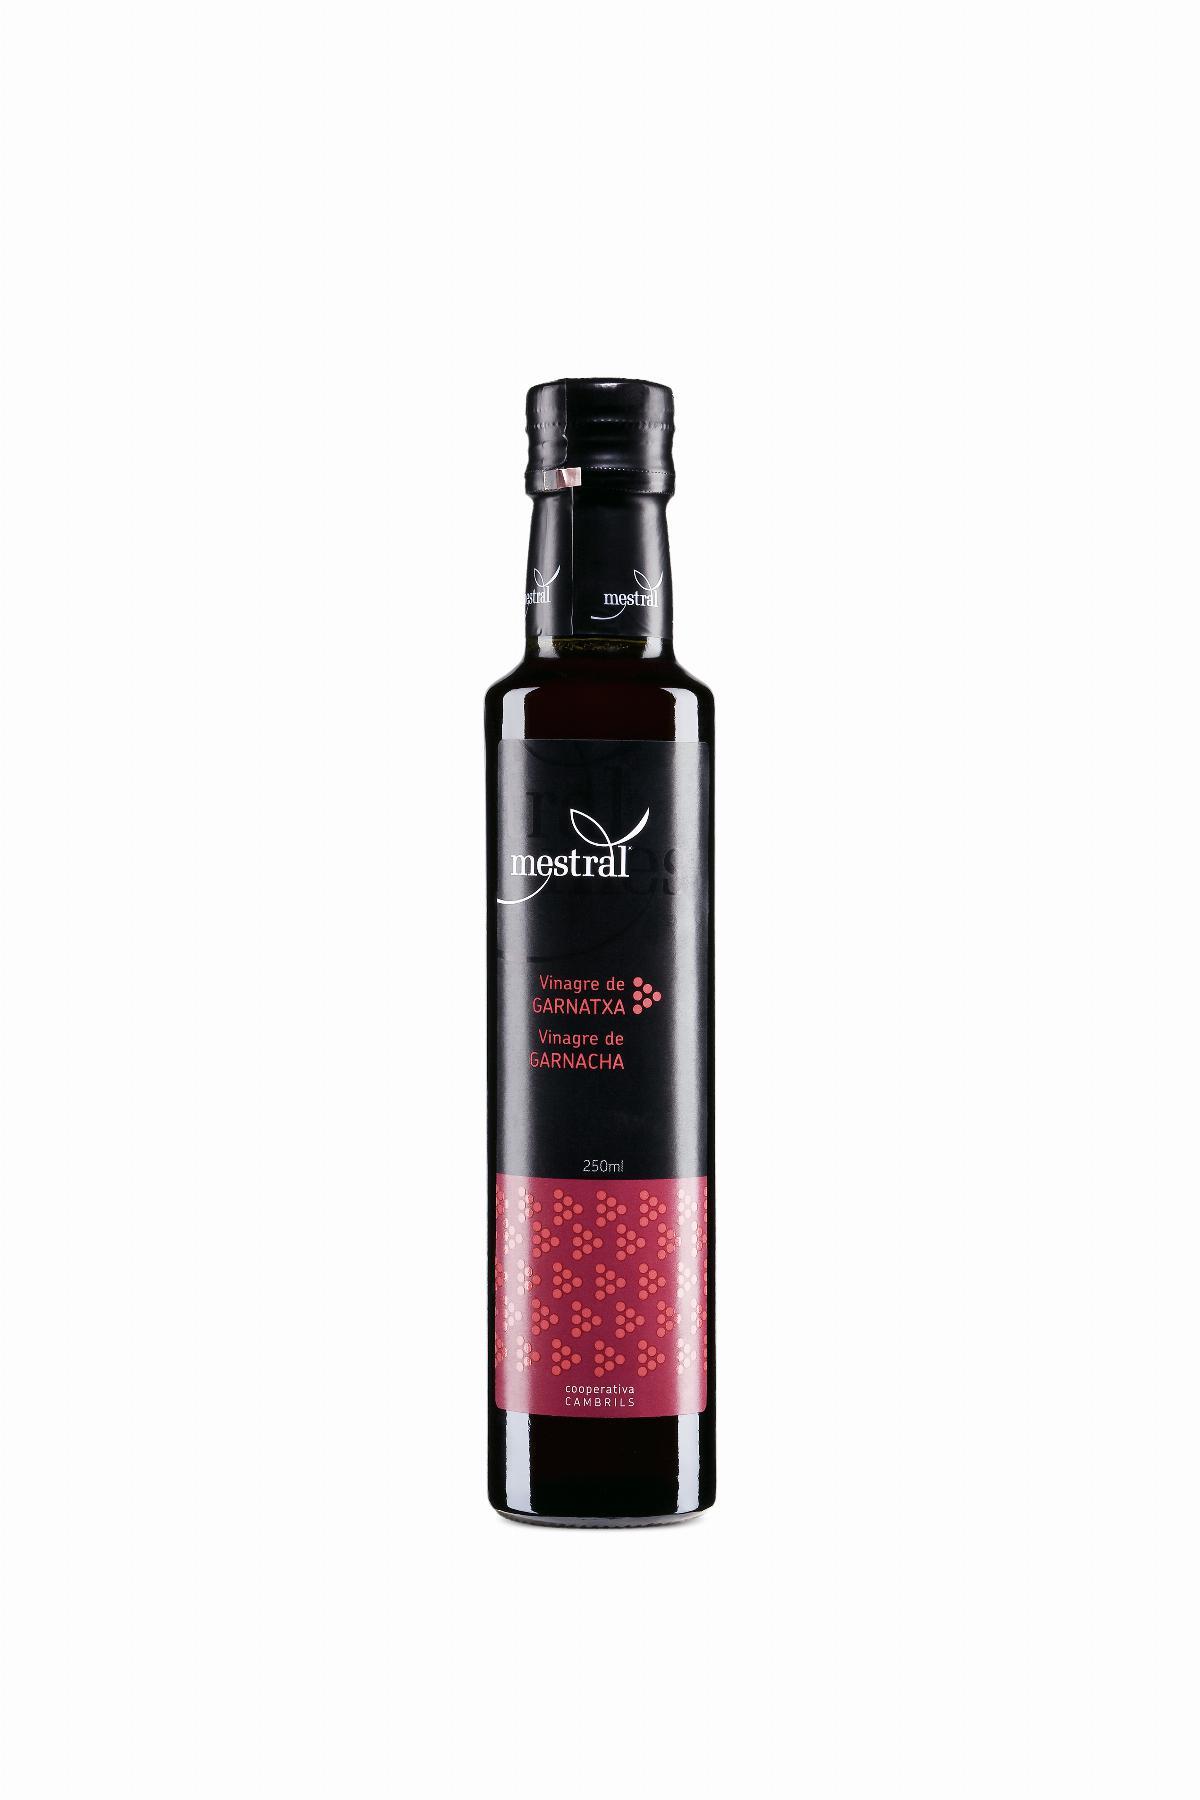 Vinagres - Vinagre de garnacha Mestral bot. 250 ml - Mestral Cambrils